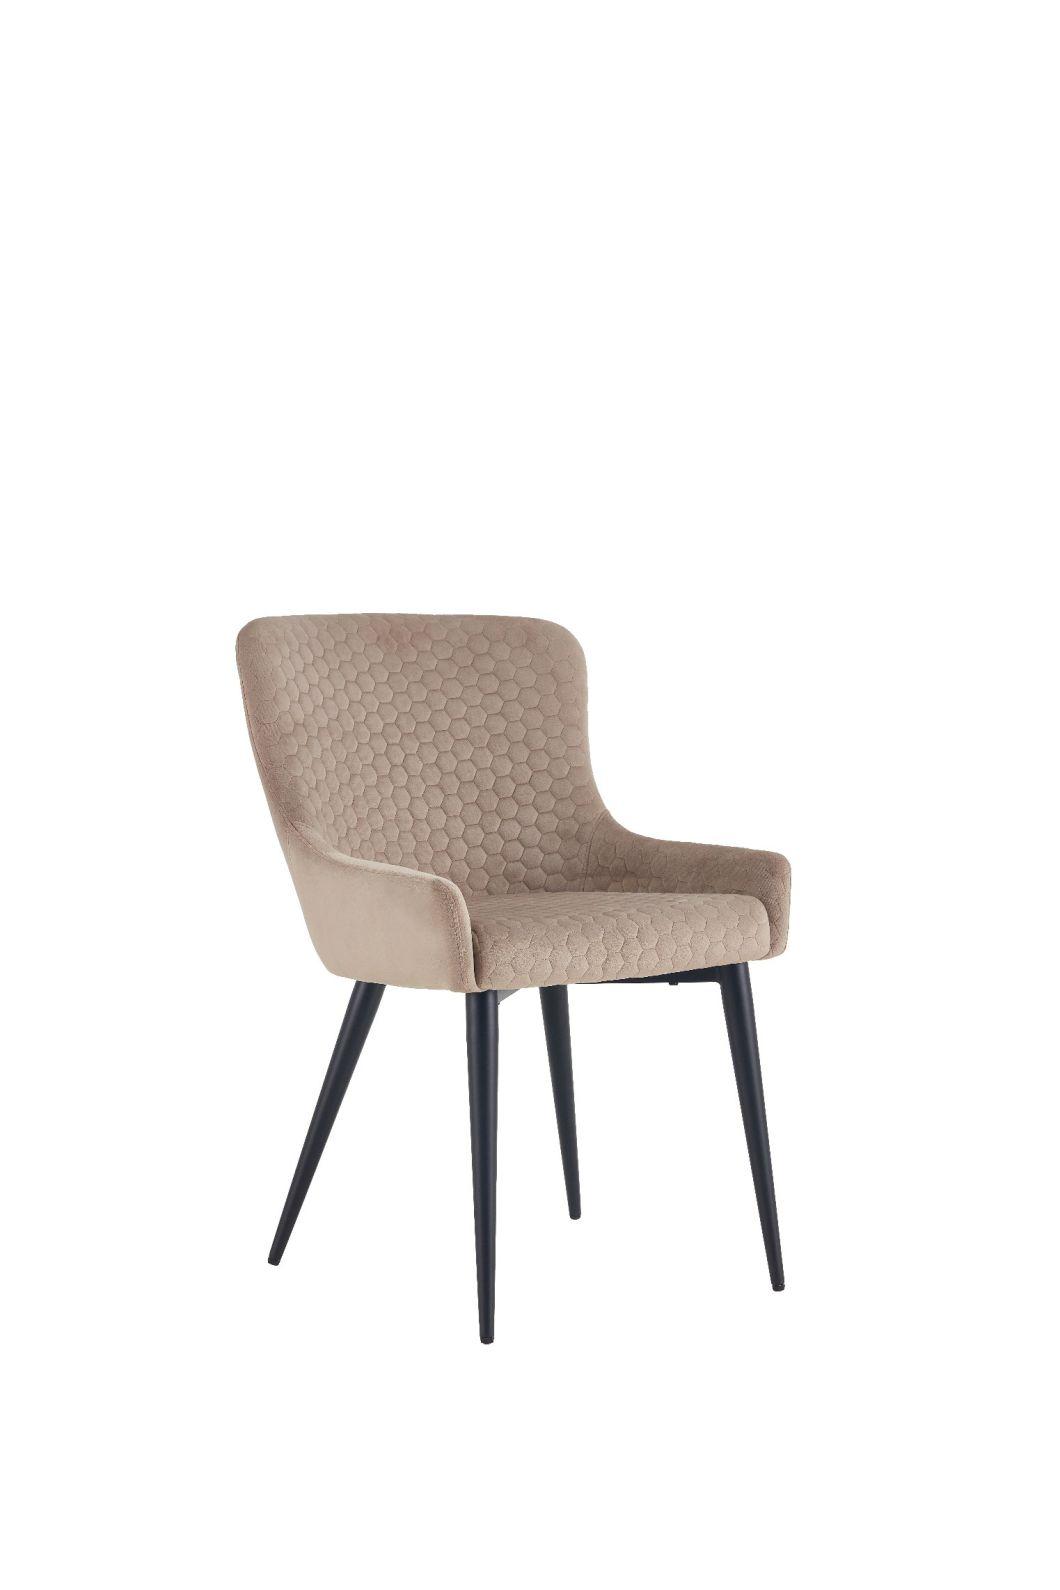 Metal Leg with Velvet Fabric for Scandinavian Cafe Danish UK Dining Chairs